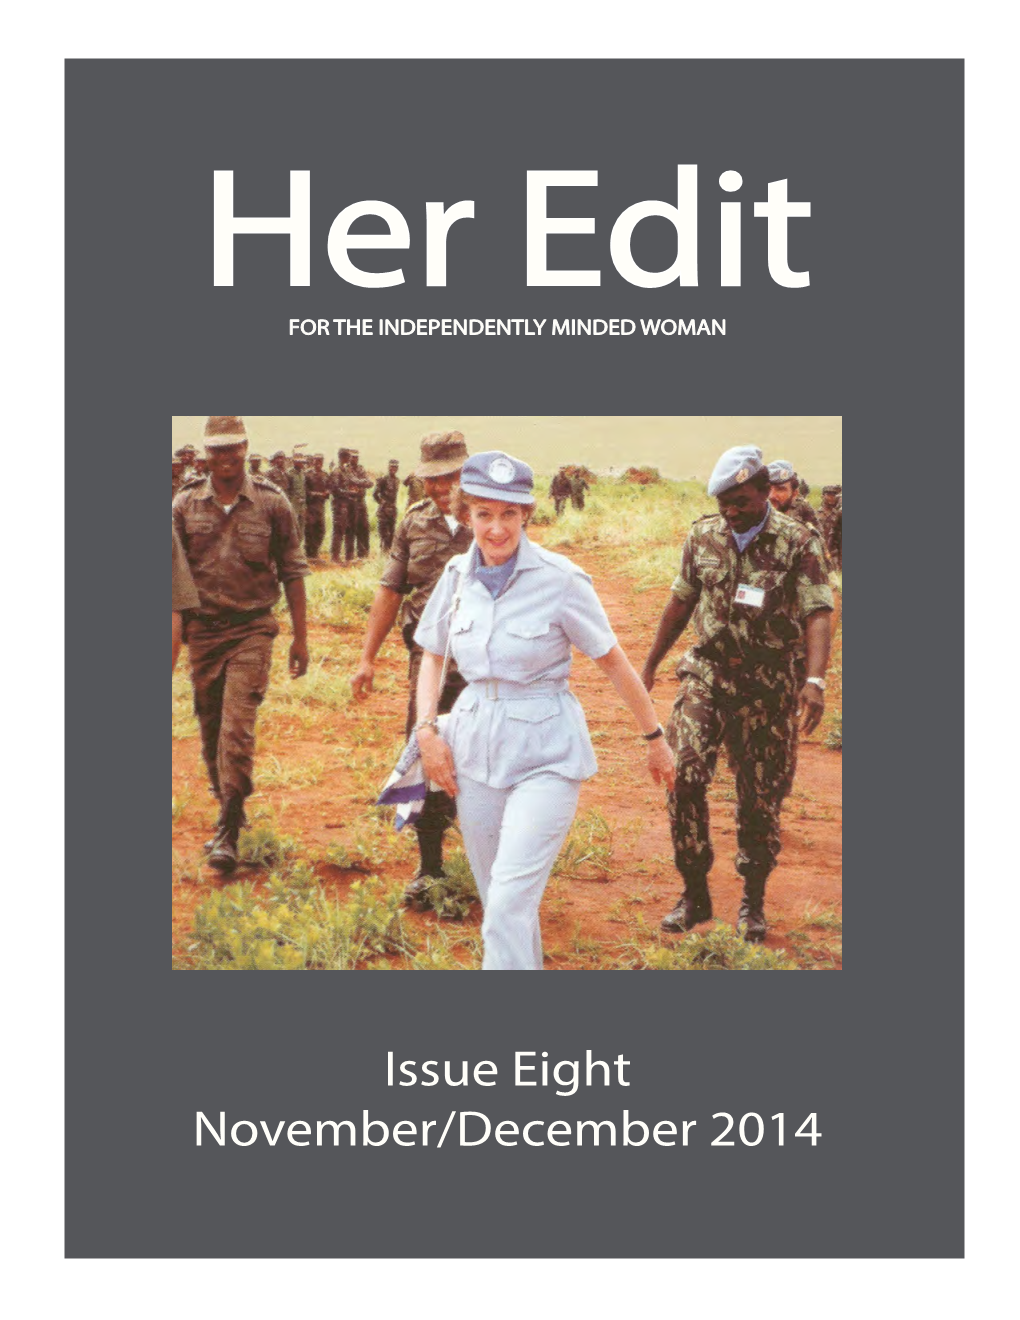 Issue Eight November/December 2014 Her Editor Her Edit Issue Eight November/December 2014 the Work Issue